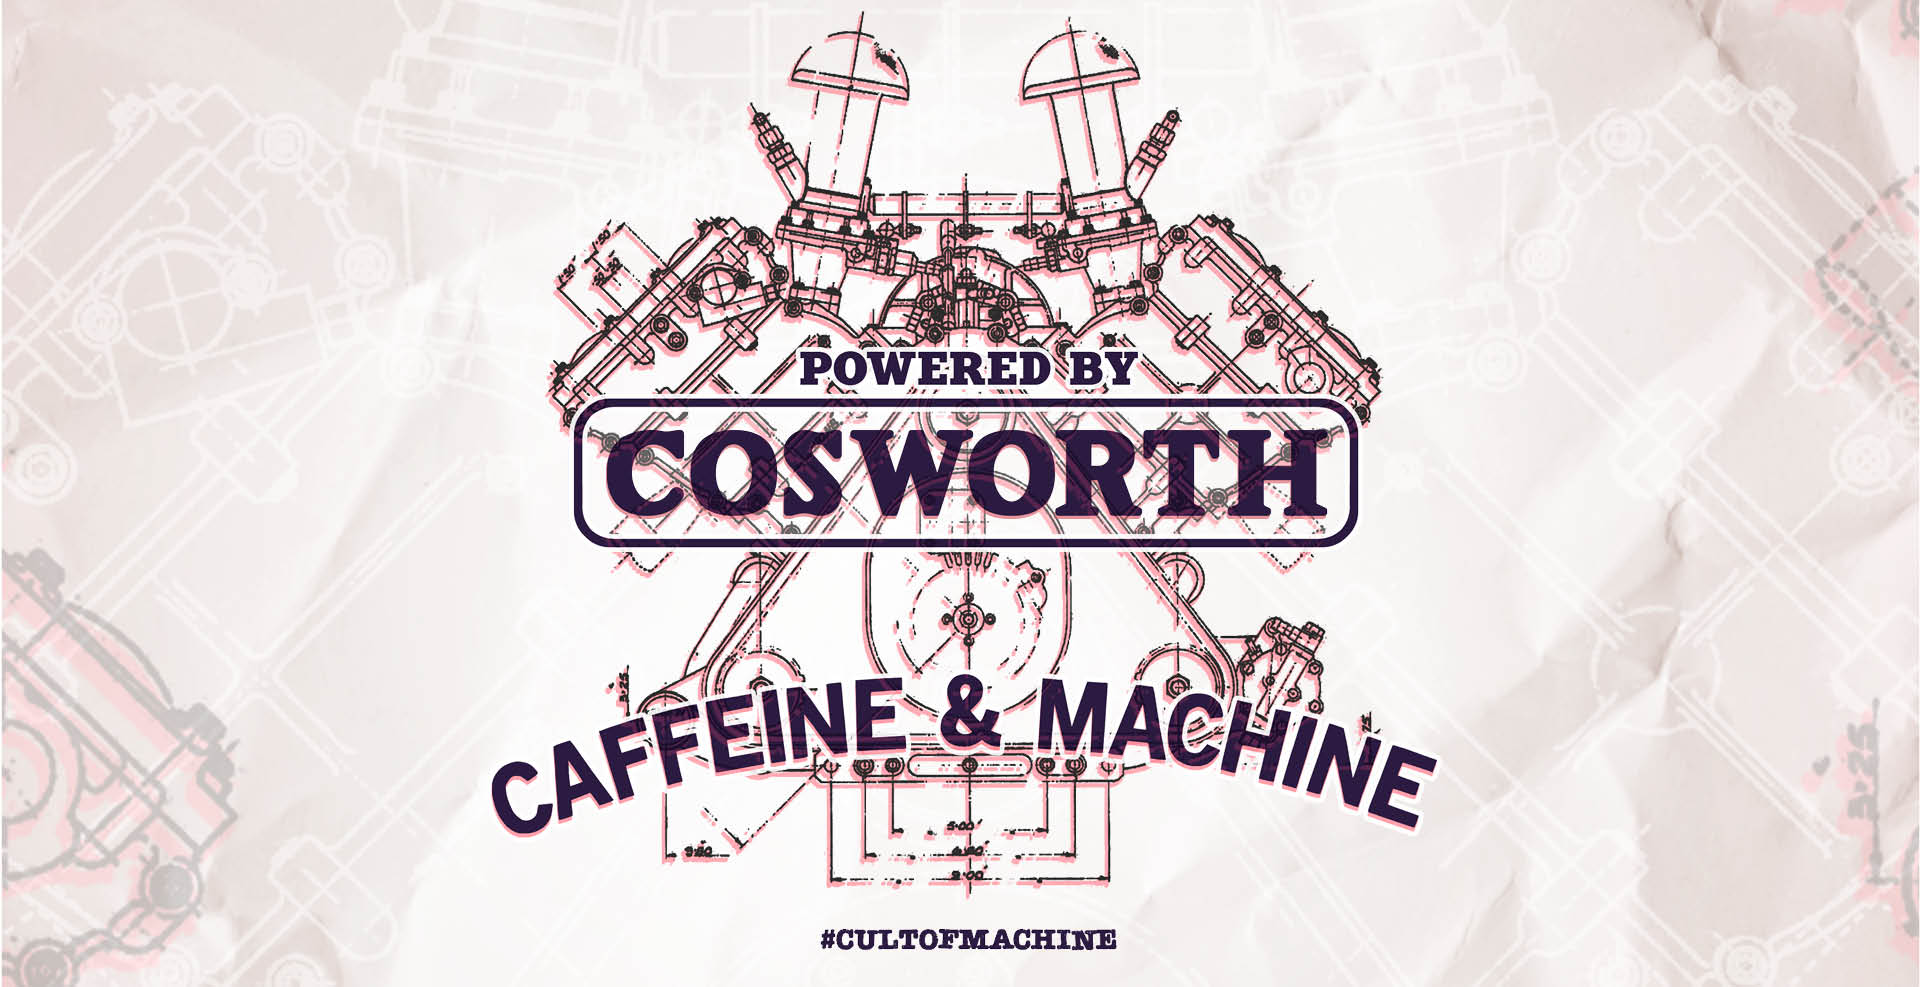 Cosworth announces Caffeine & Machine clothing collaboration